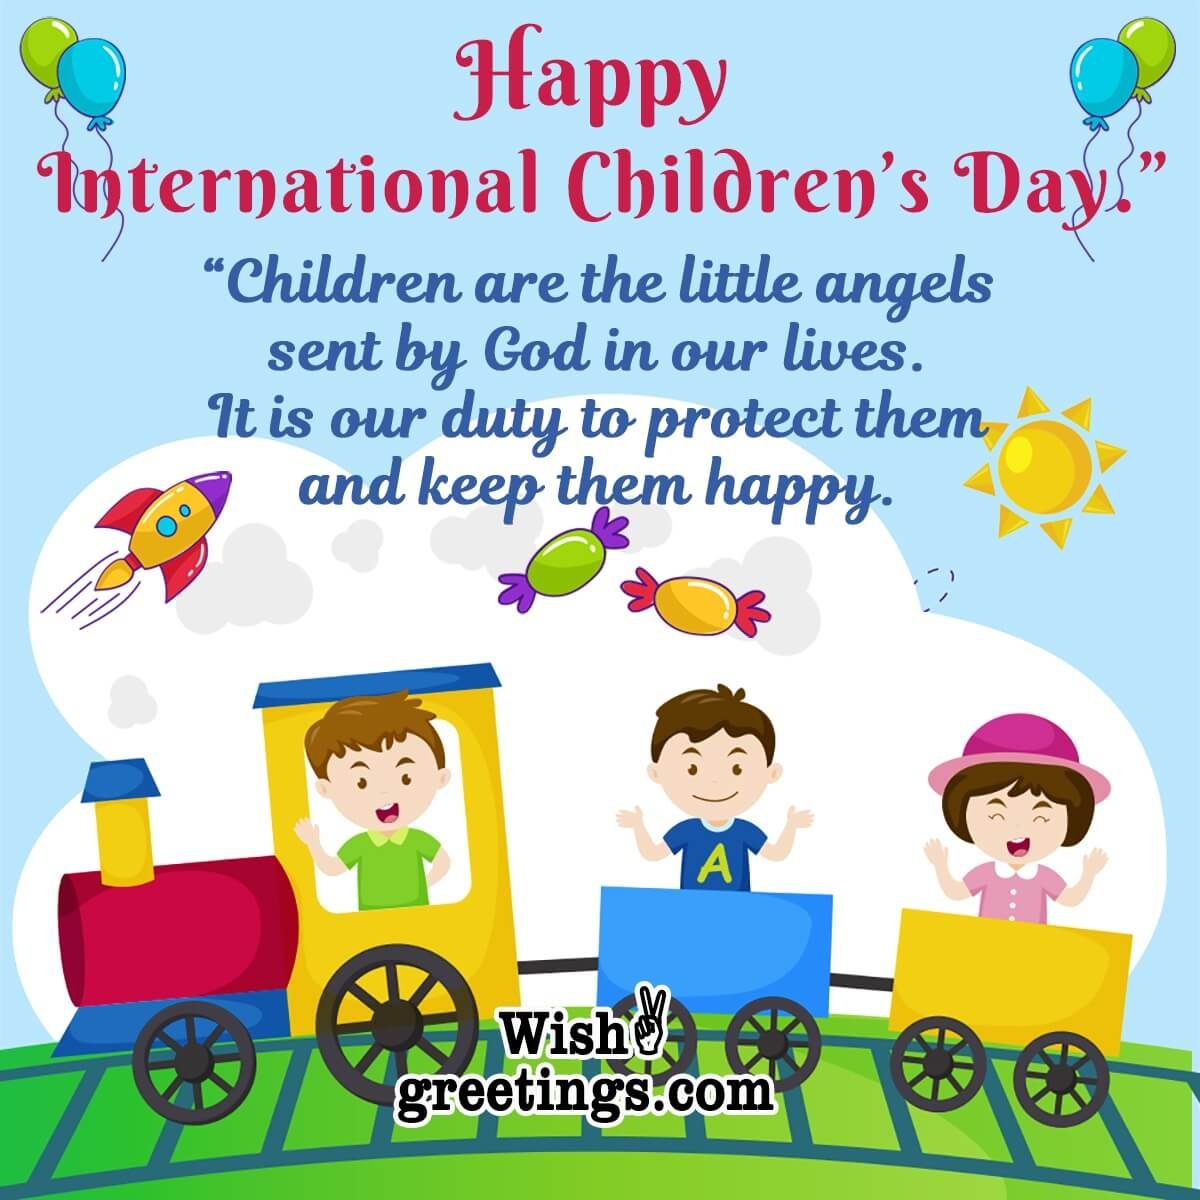 International Children’s Day Messages For Whatsapp